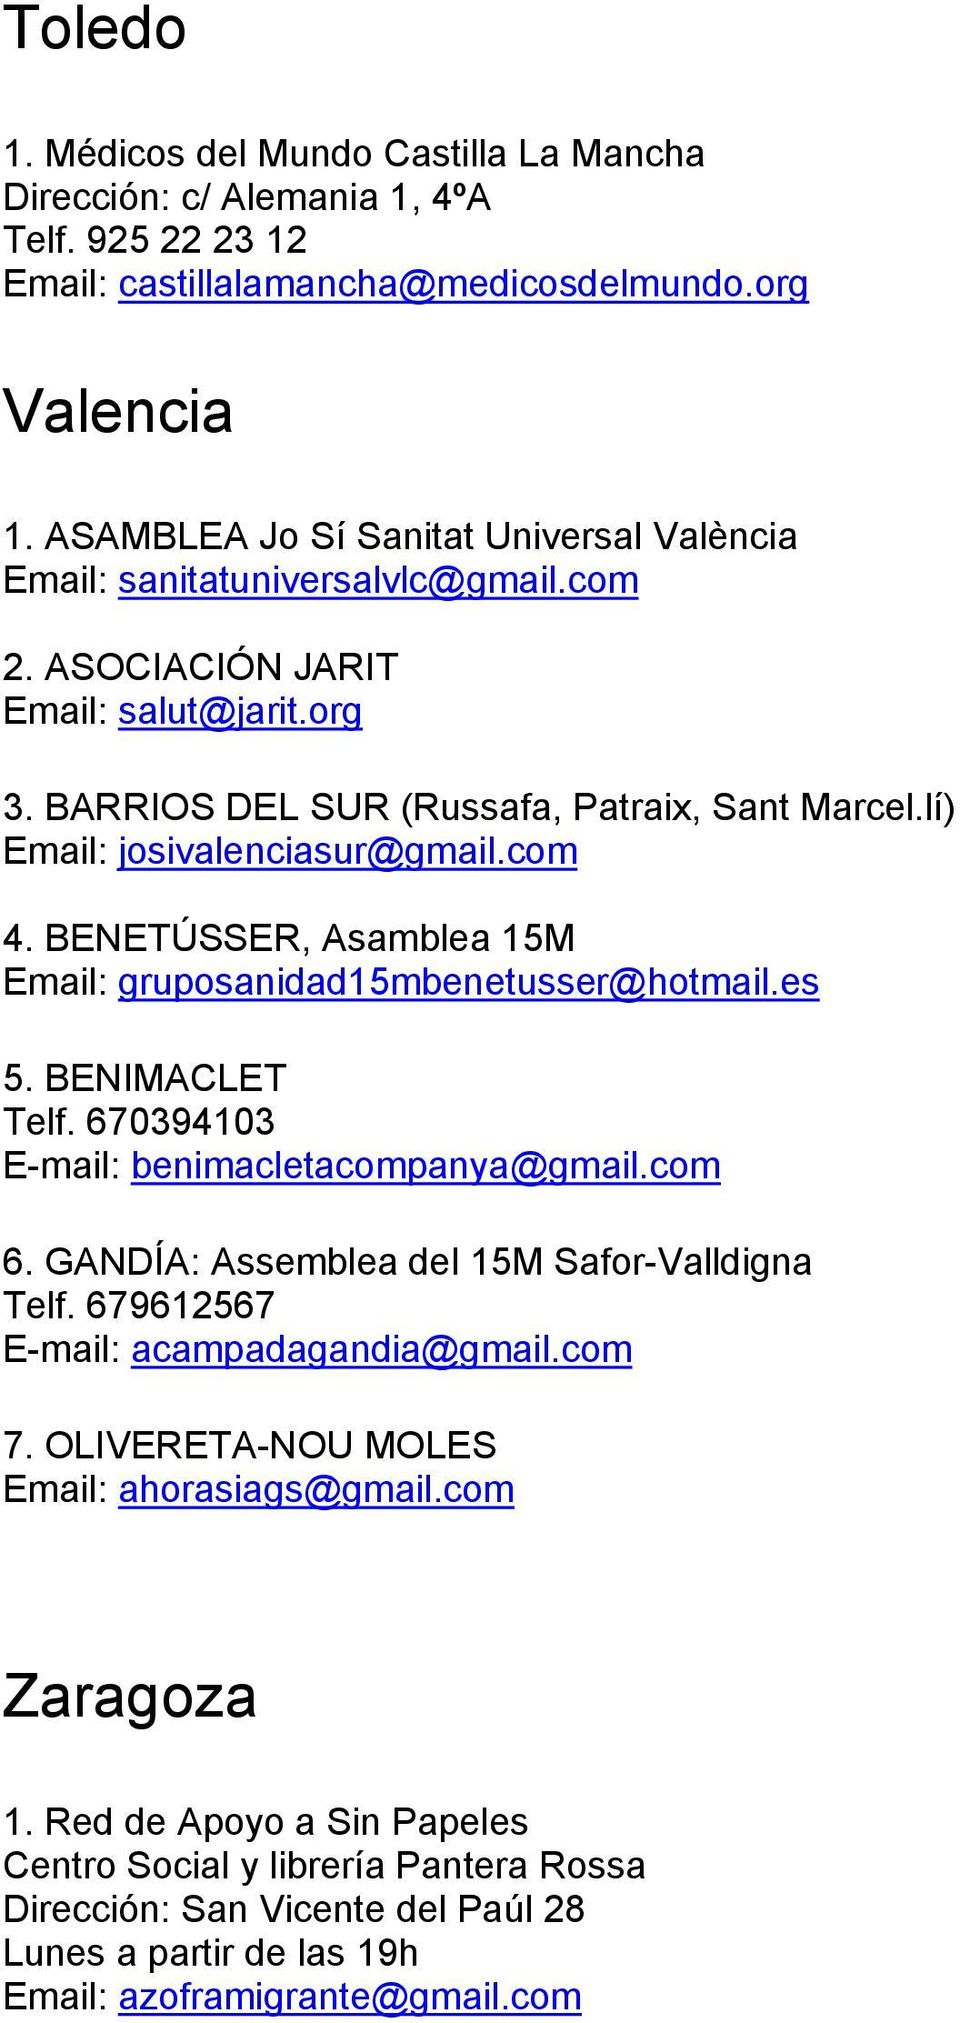 lí) Email: josivalenciasur@gmail.com 4. BENETÚSSER, Asamblea 15M Email: gruposanidad15mbenetusser@hotmail.es 5. BENIMACLET Telf. 670394103 E-mail: benimacletacompanya@gmail.com 6.